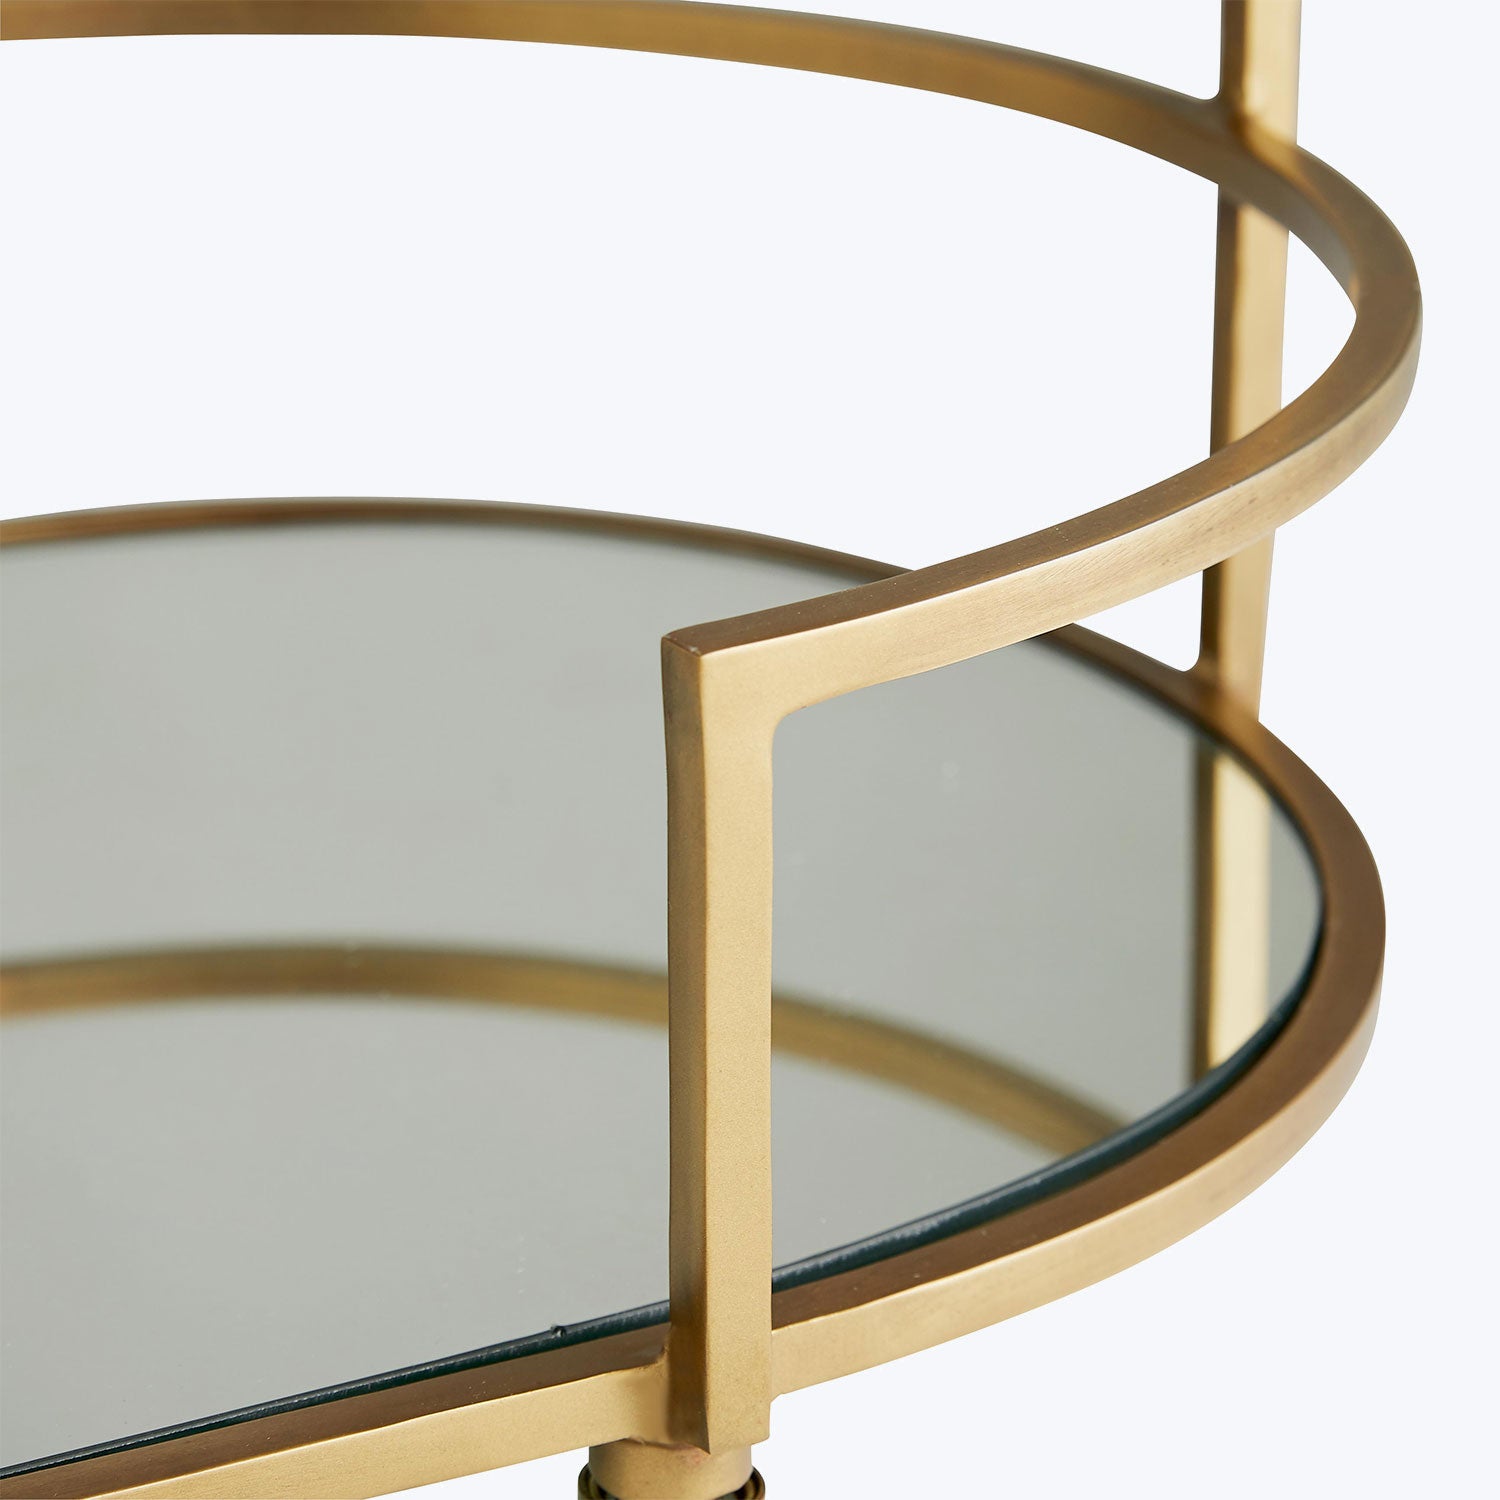 A modern, minimalist side table with a sleek metal frame.